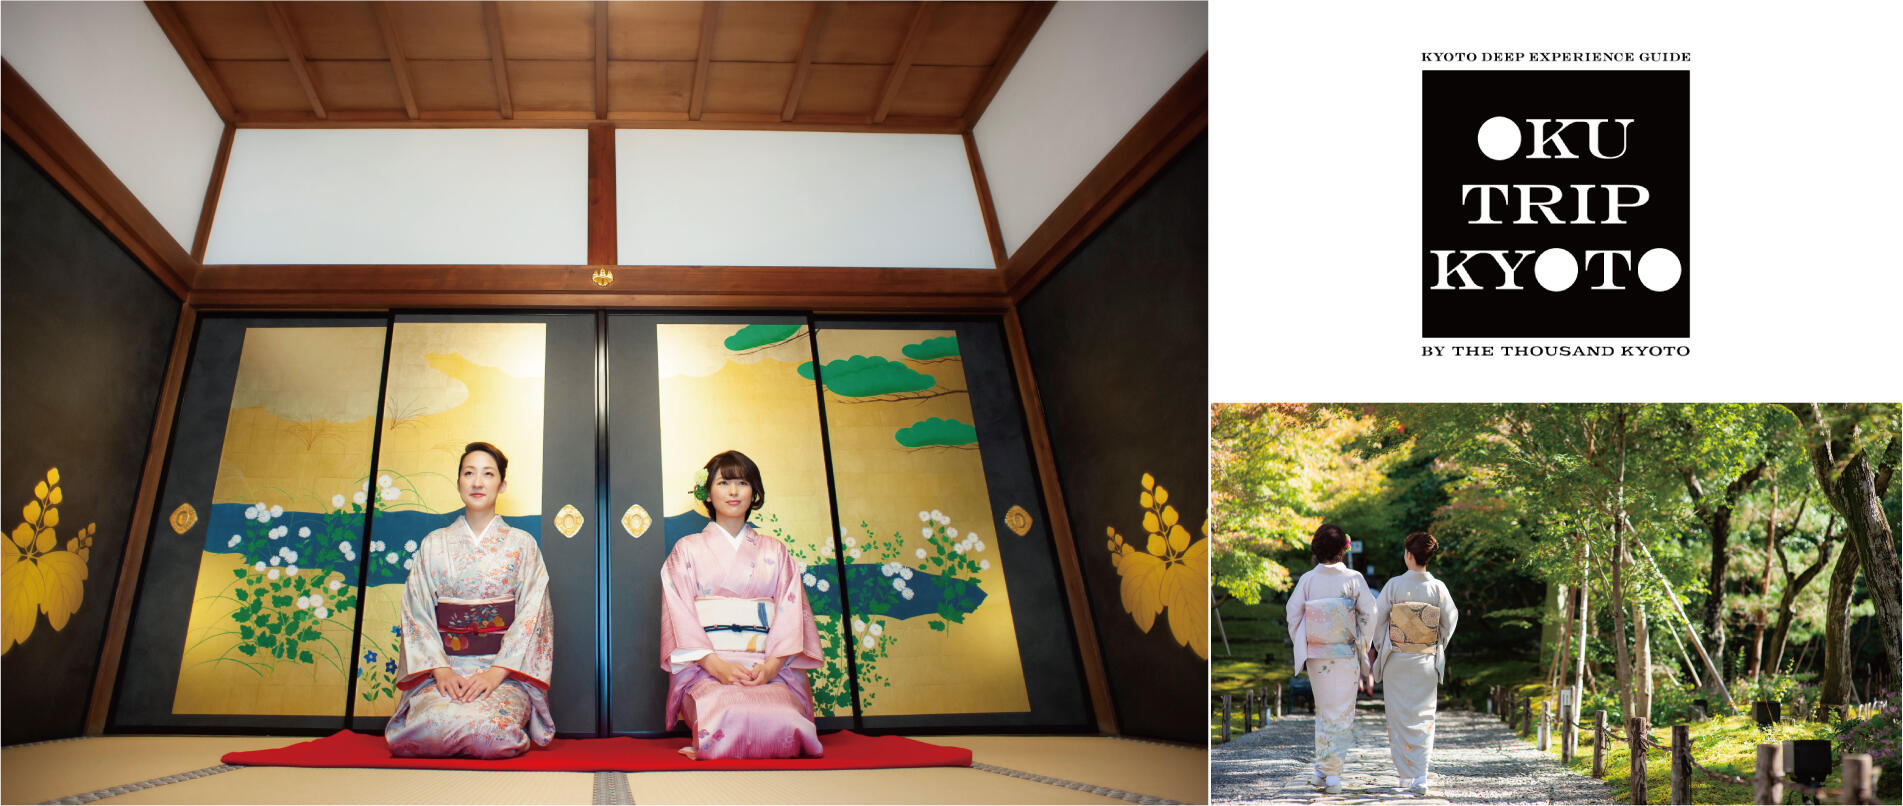 Kimono Rentals - Travel Kyoto in a Kimono